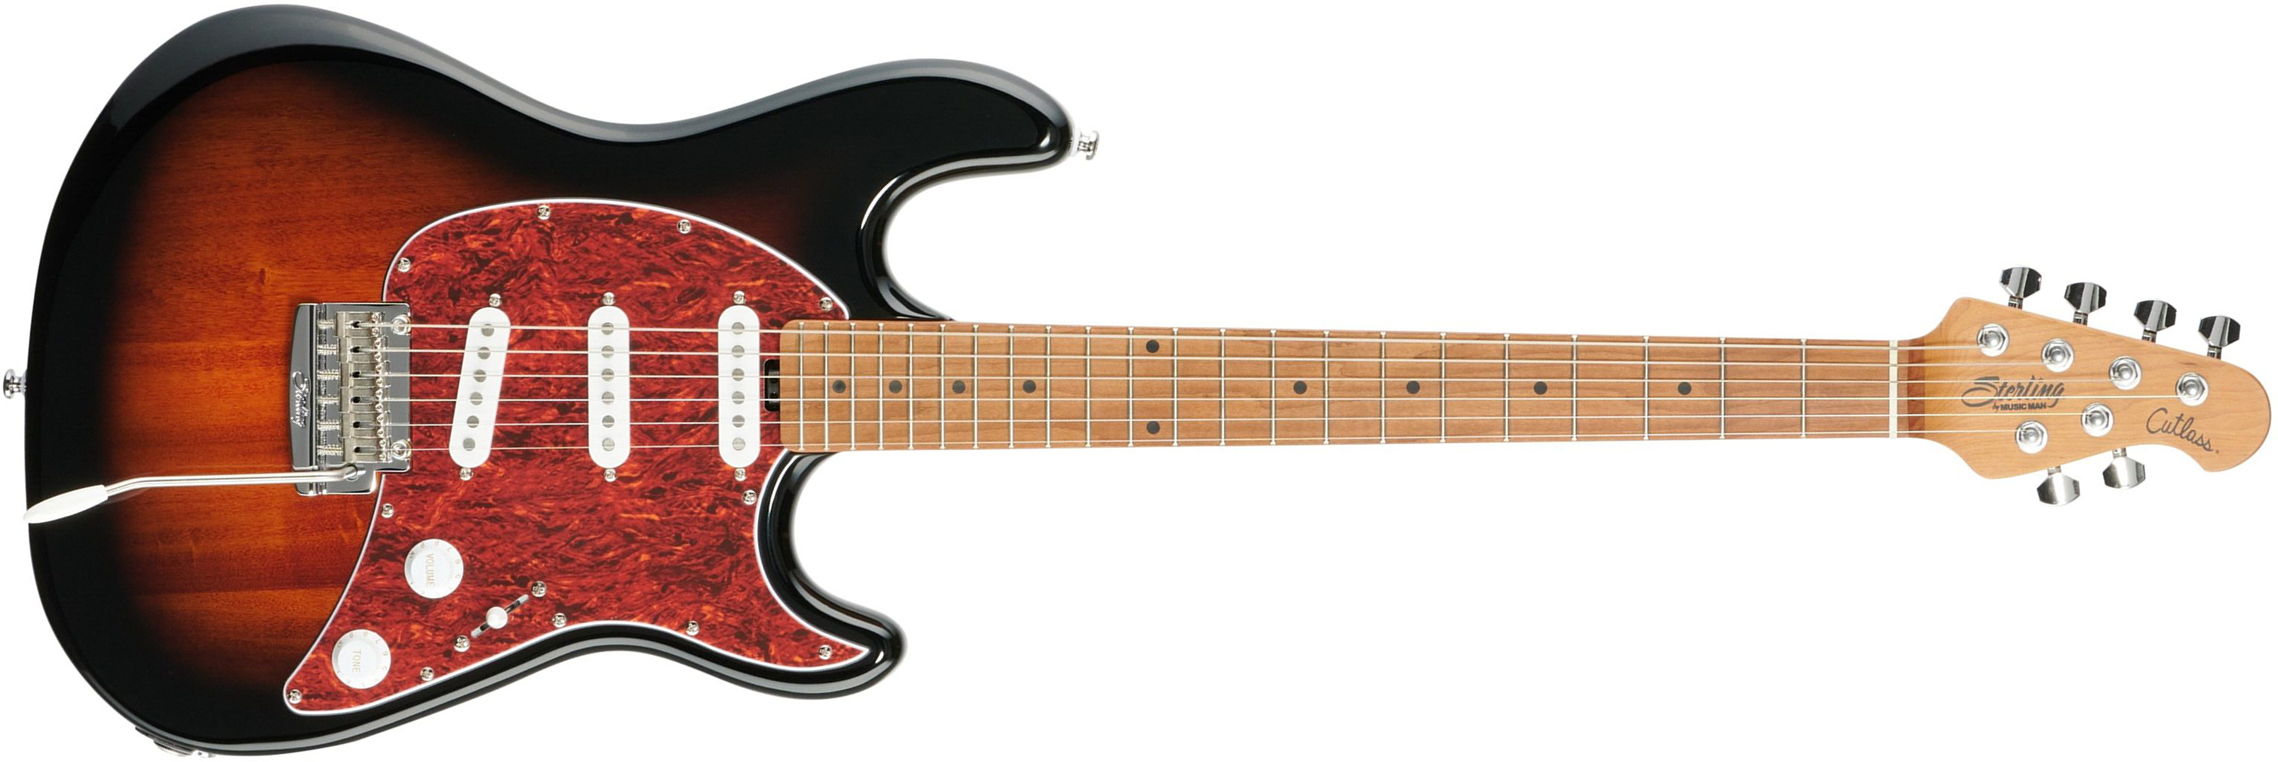 Sterling By Musicman Cutlass Ct50sss 3s Trem Mn - Vintage Sunburst - Str shape electric guitar - Main picture